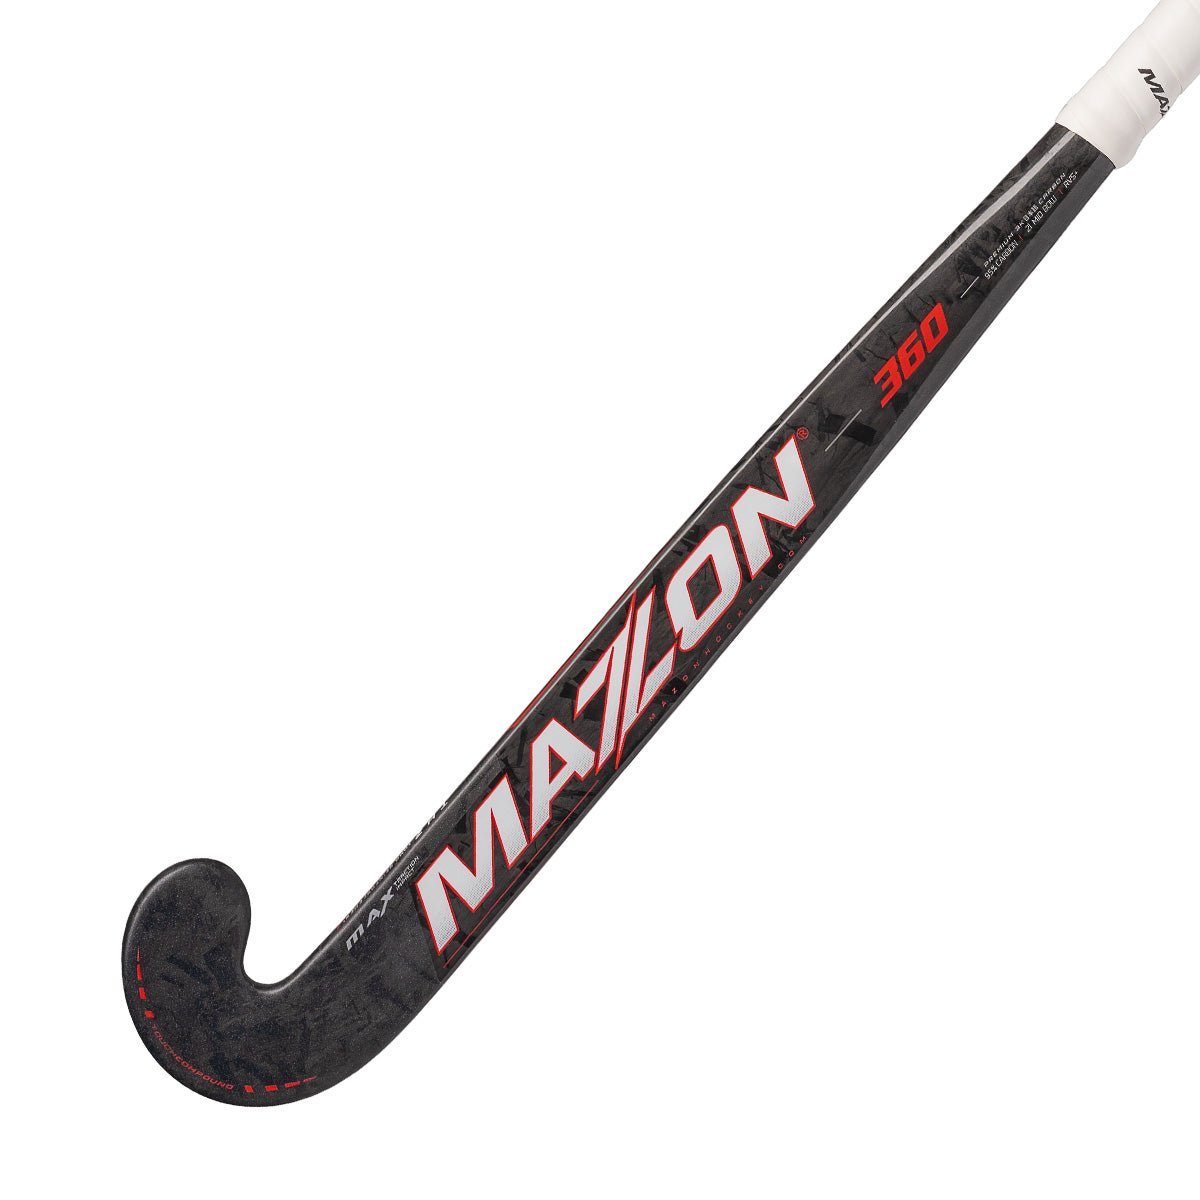 Mazon BM 9series 360 MB - Just Hockey